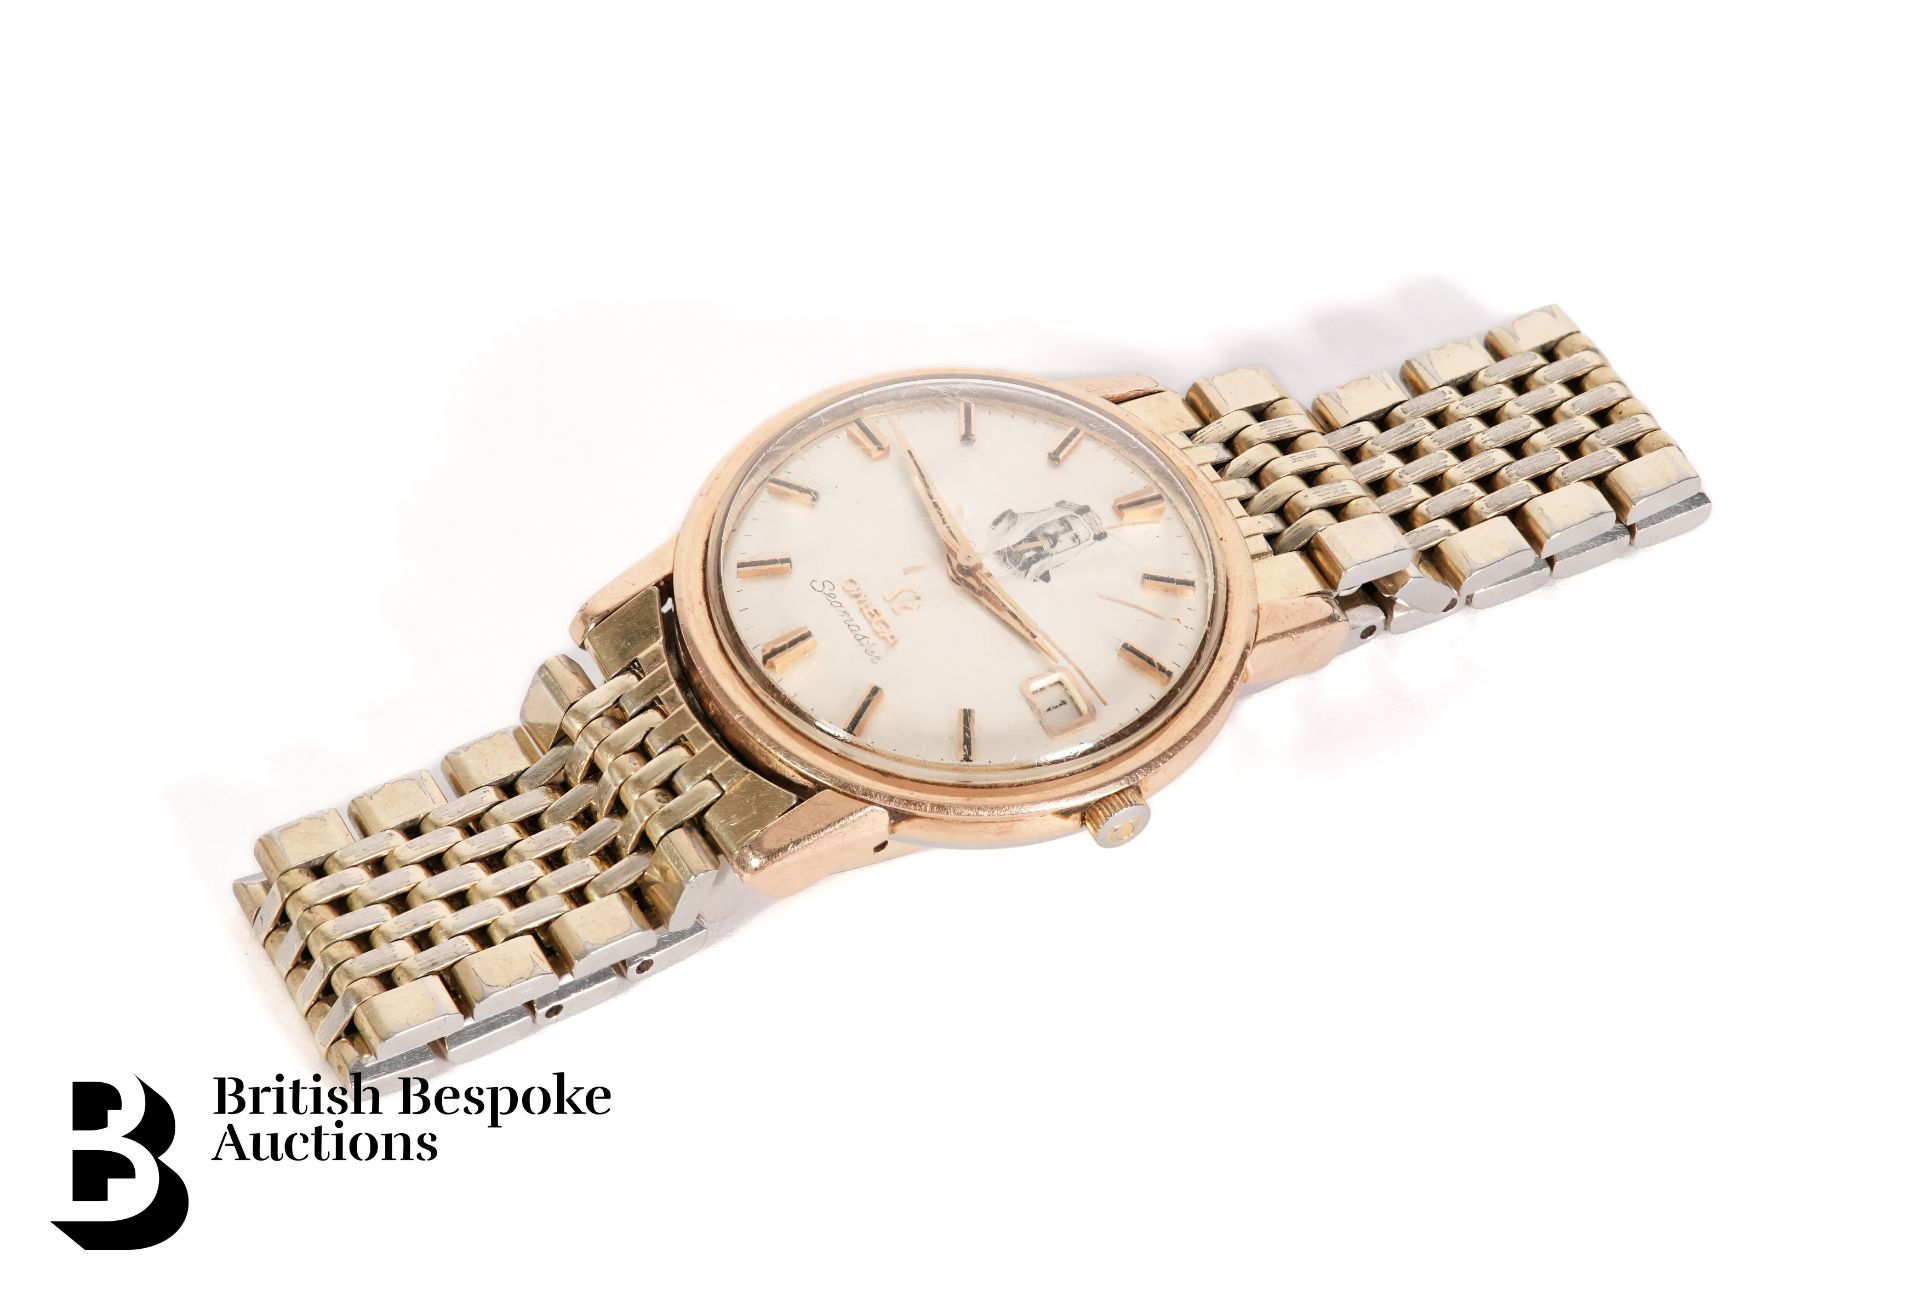 Rare 1964 Omega Seamaster Wrist Watch - Image 2 of 5